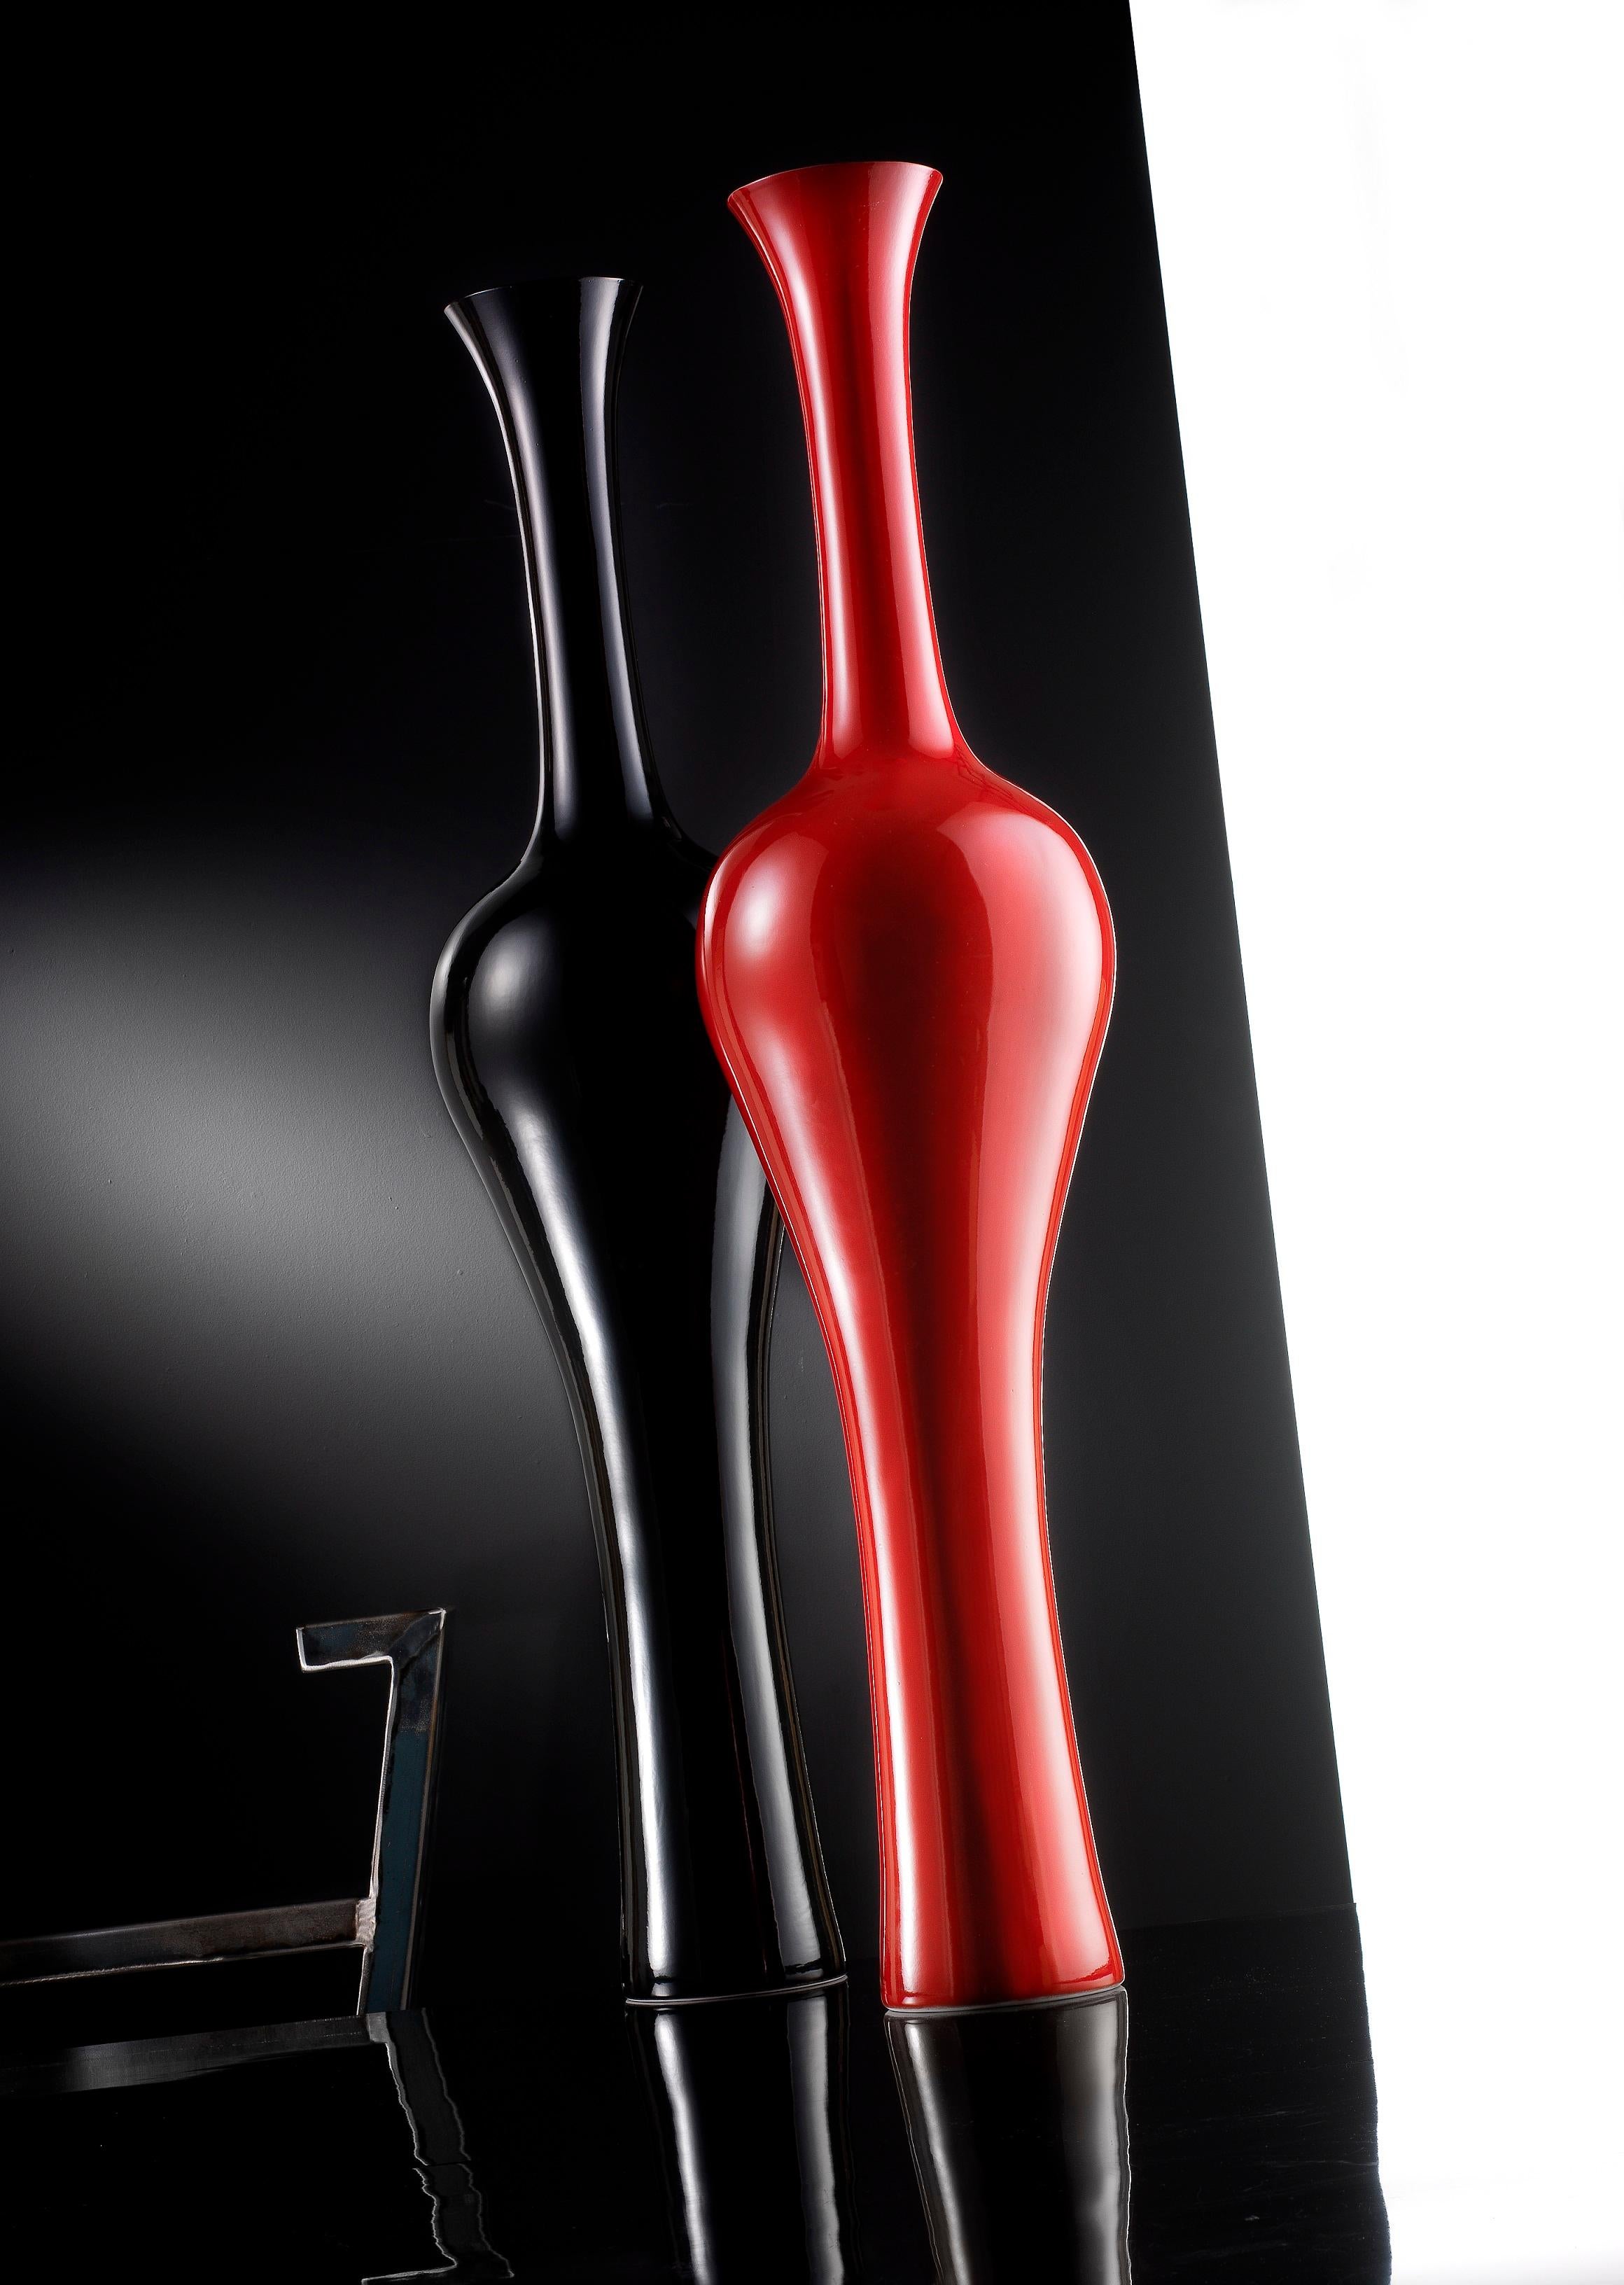 GILDA - Ceramic vase black glazed finished

cod. GILDA001
Measures: Height 160.0 cm, diameter 38.0 cm.

  